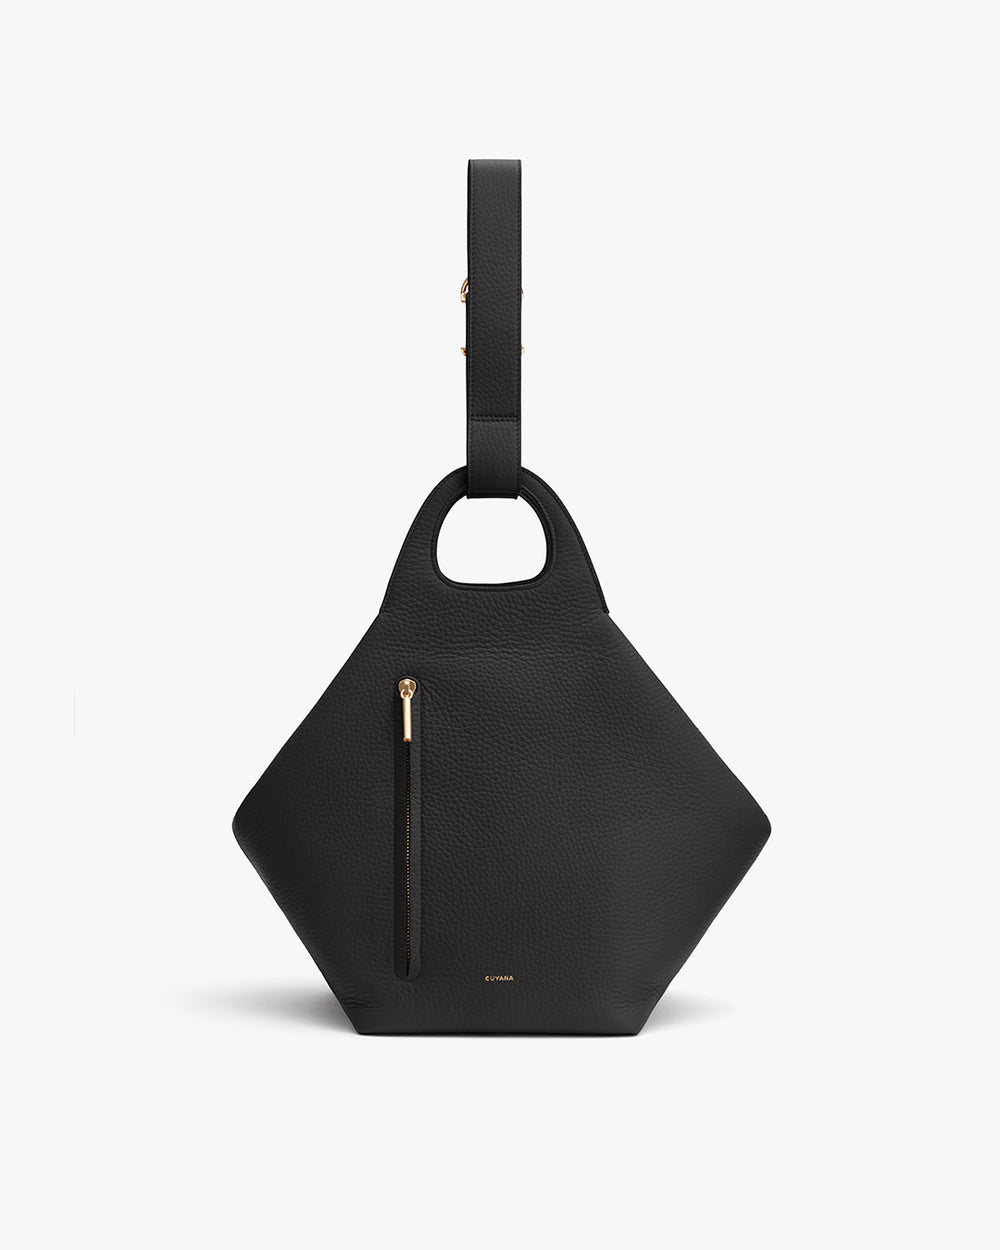 Bennett Casual Laptop Bag School Bags for Boys Girls 15.6-inch, 25 LTR  Office & College bags for Mens Water Repellent Backpack for Men & Women ( GREY) - Buy Bennett Casual Laptop Bag